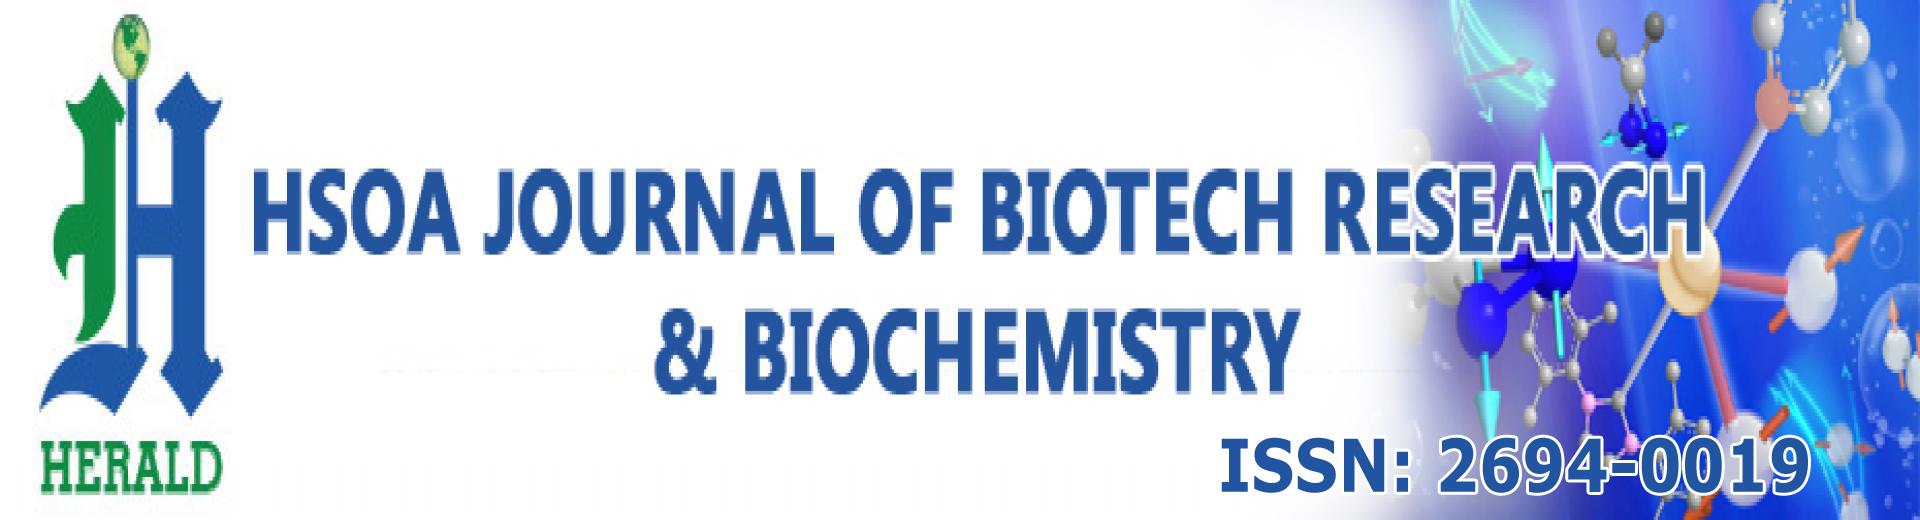 Journal of Biotech Research & Biochemistry